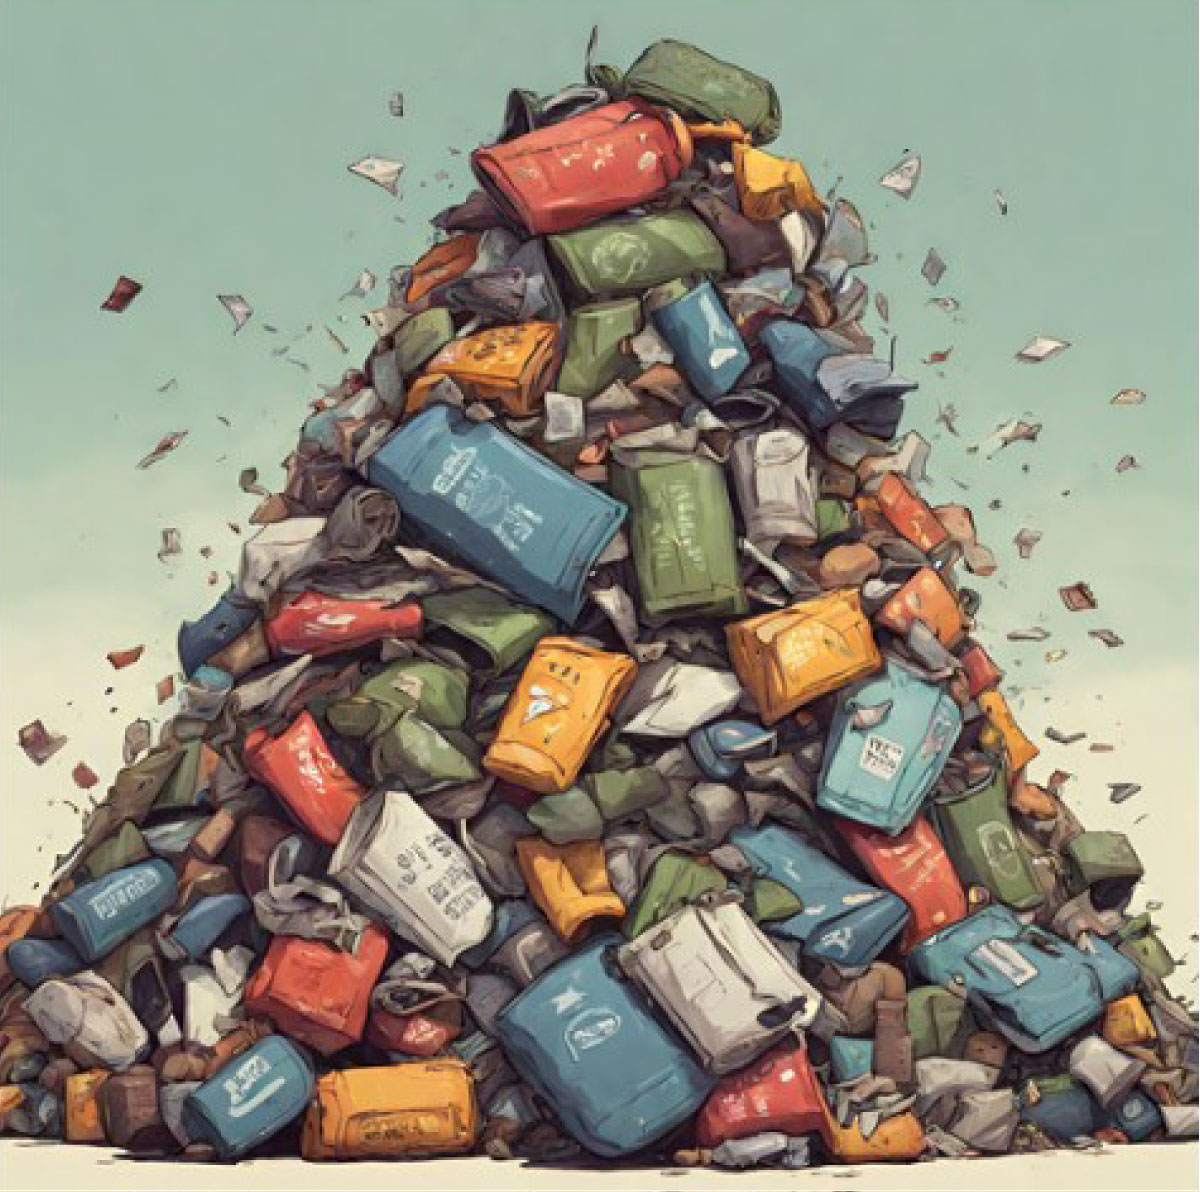 Pile of trash